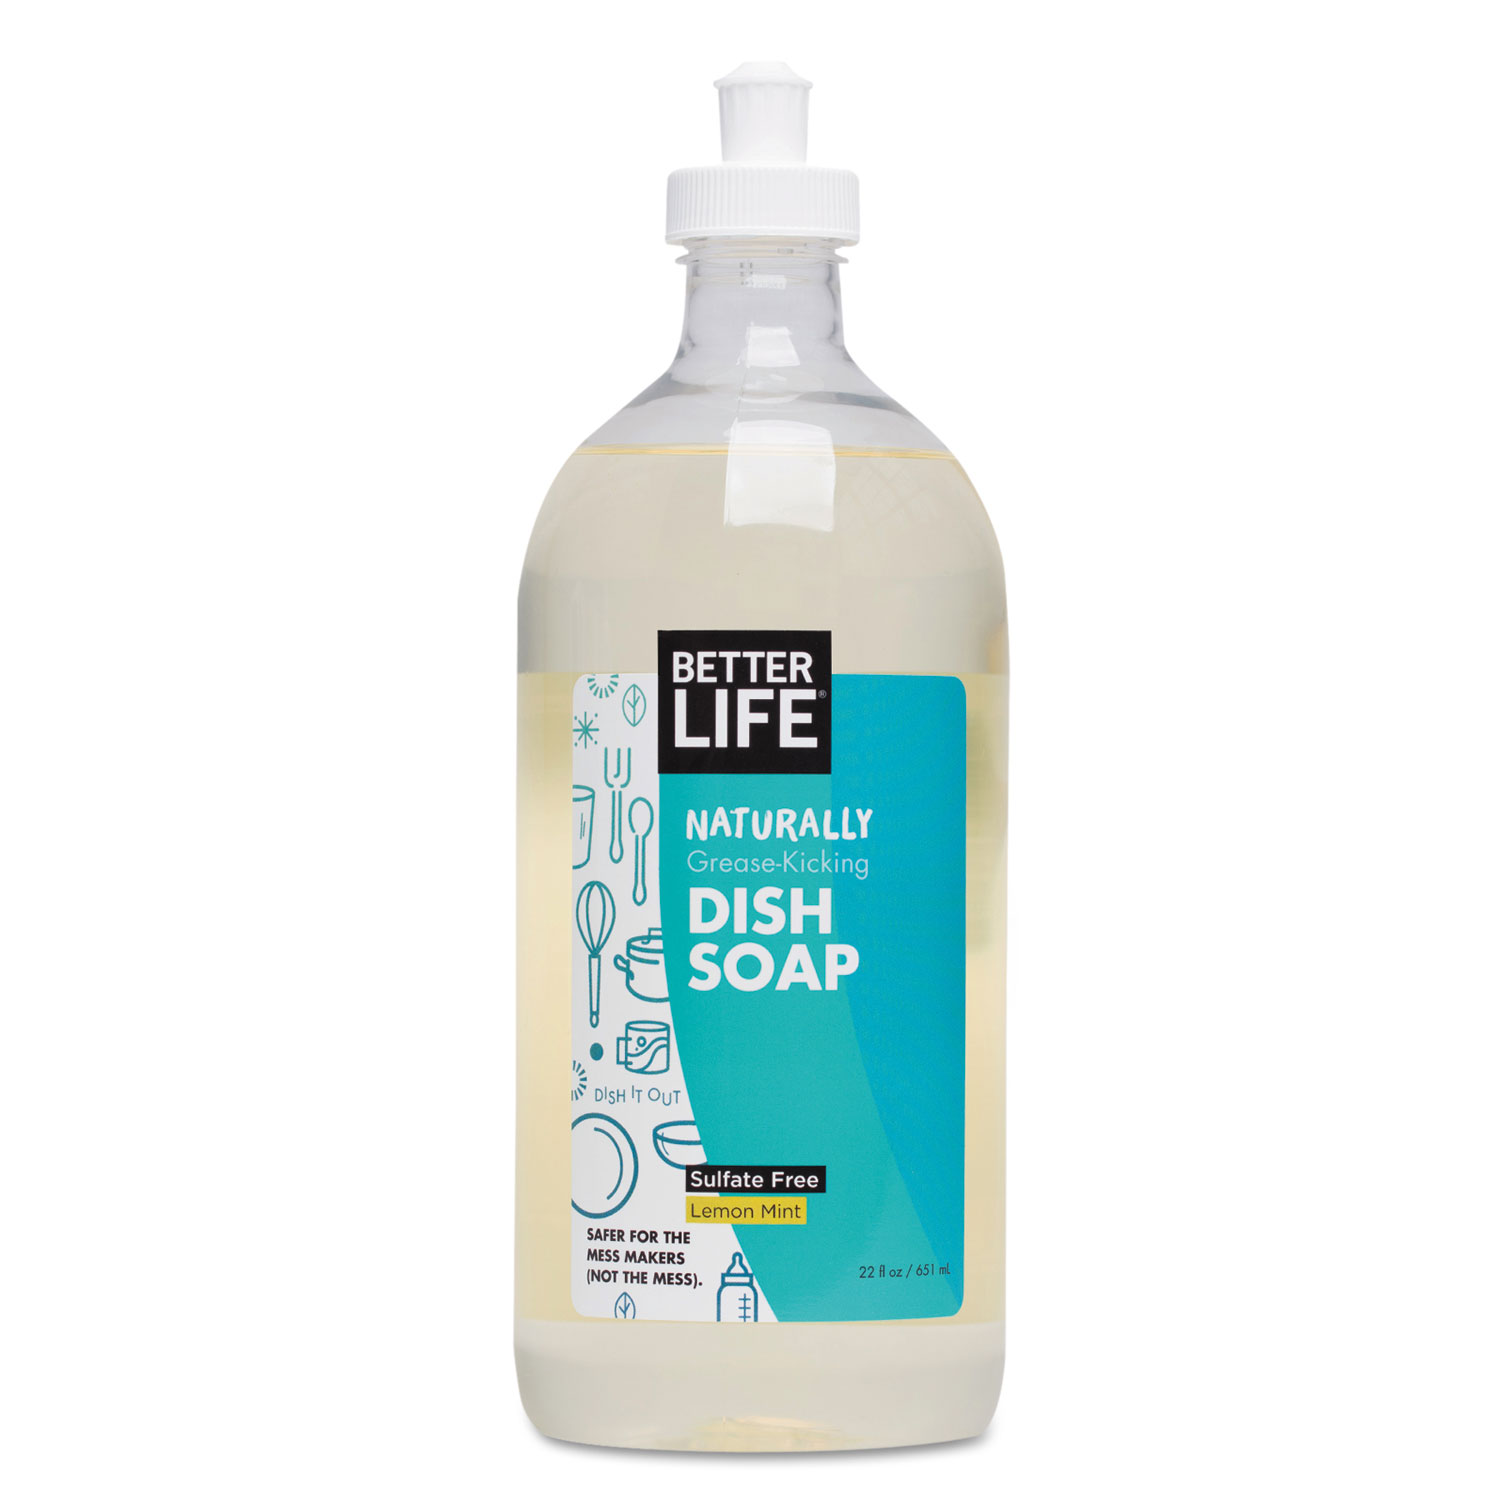 Naturally Grease-Kicking Dish Soap, Lemon Mint, 22 oz Bottle